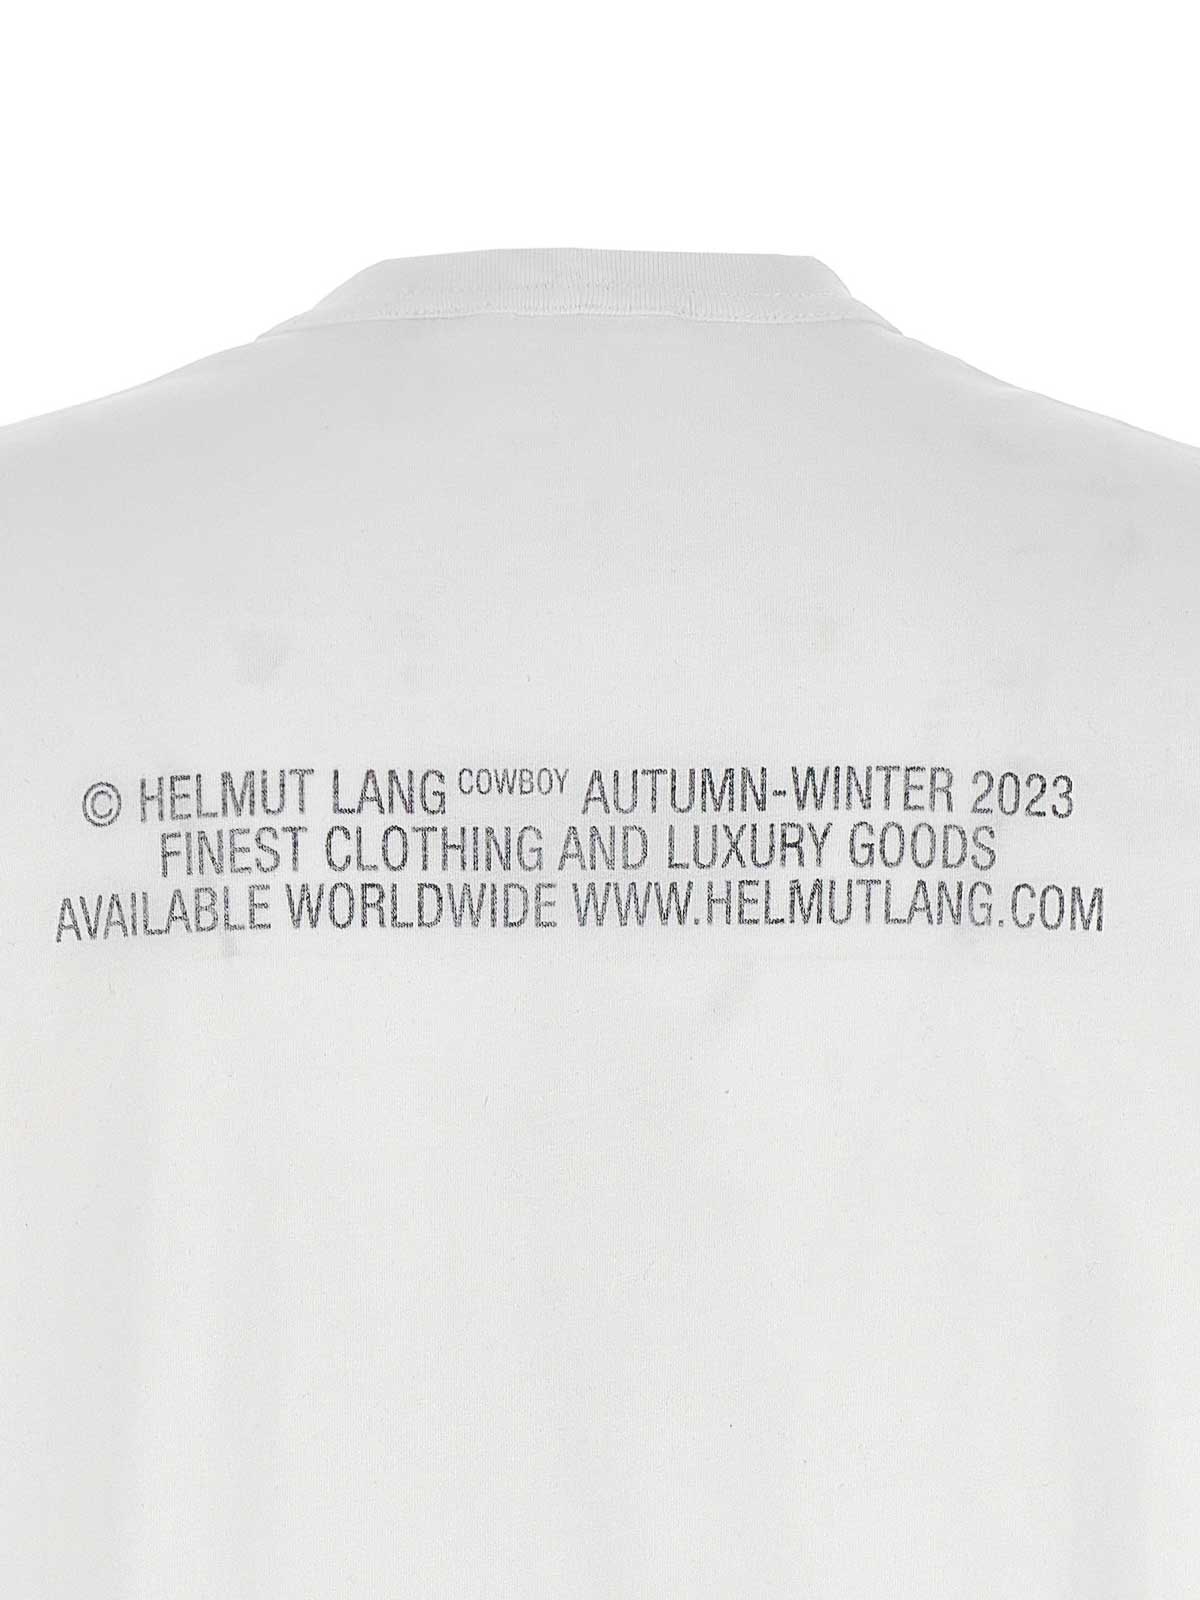 T-shirts Helmut Lang - cowboy t-shirt - N06HW524100 | Shop online